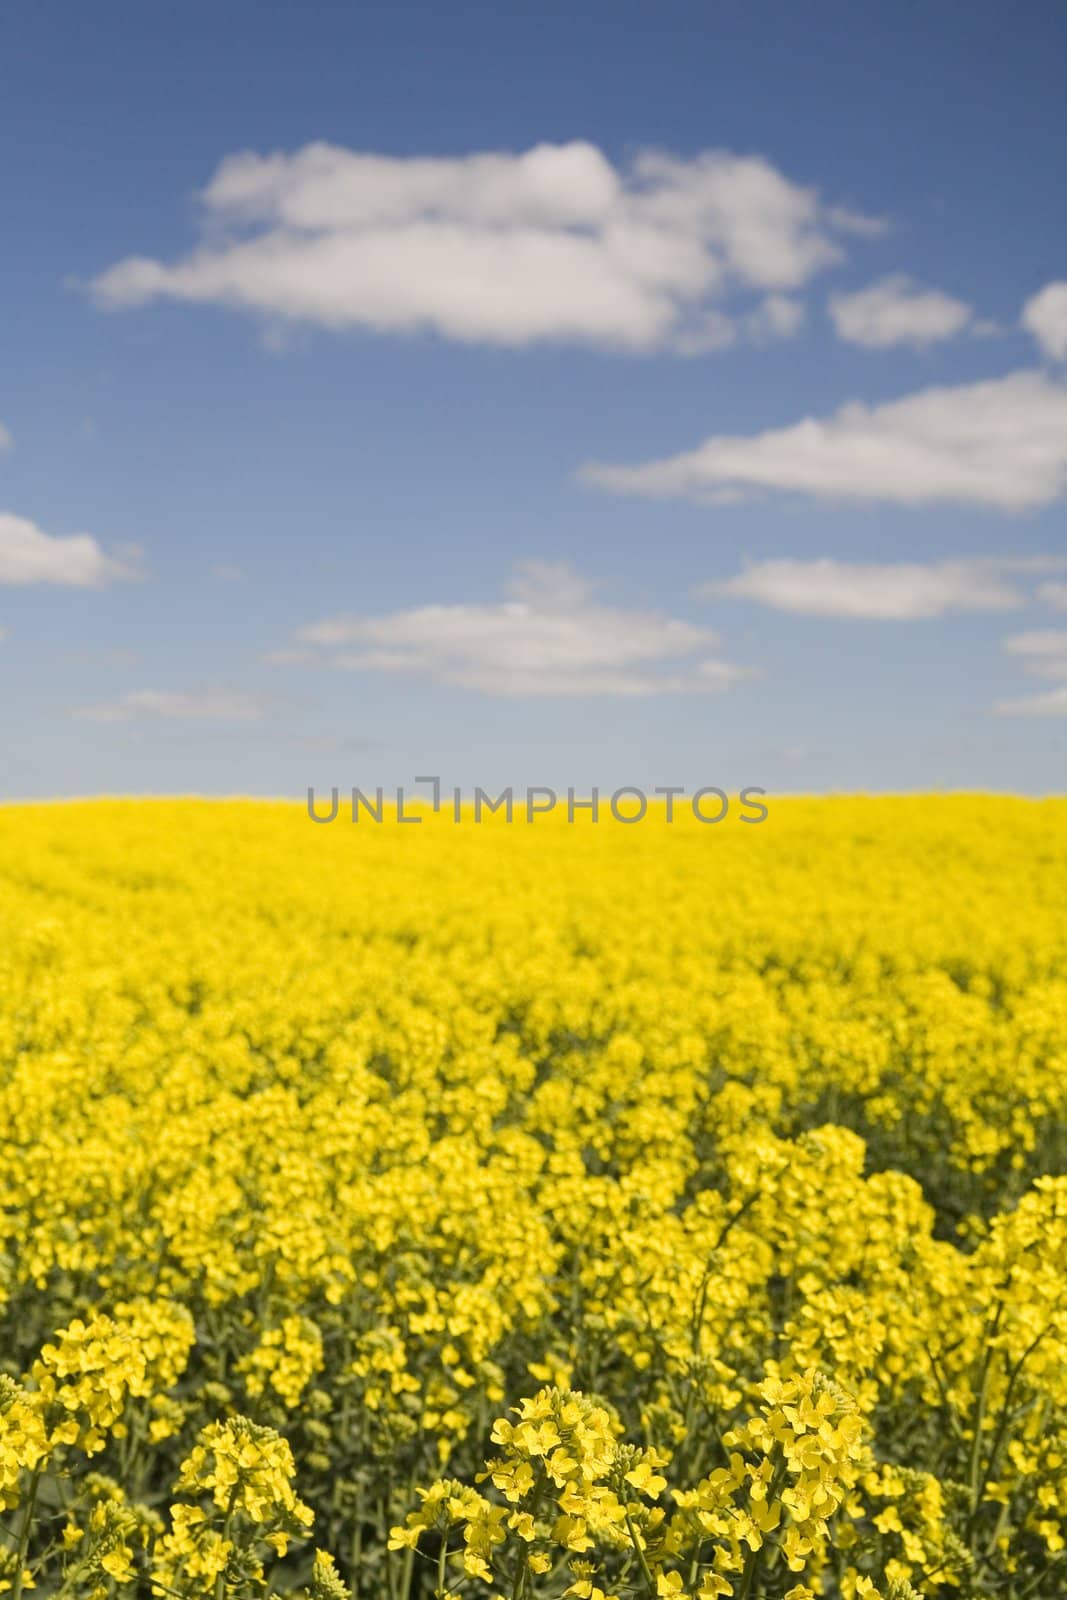 cloudy sky over yellow rape field - polish spring